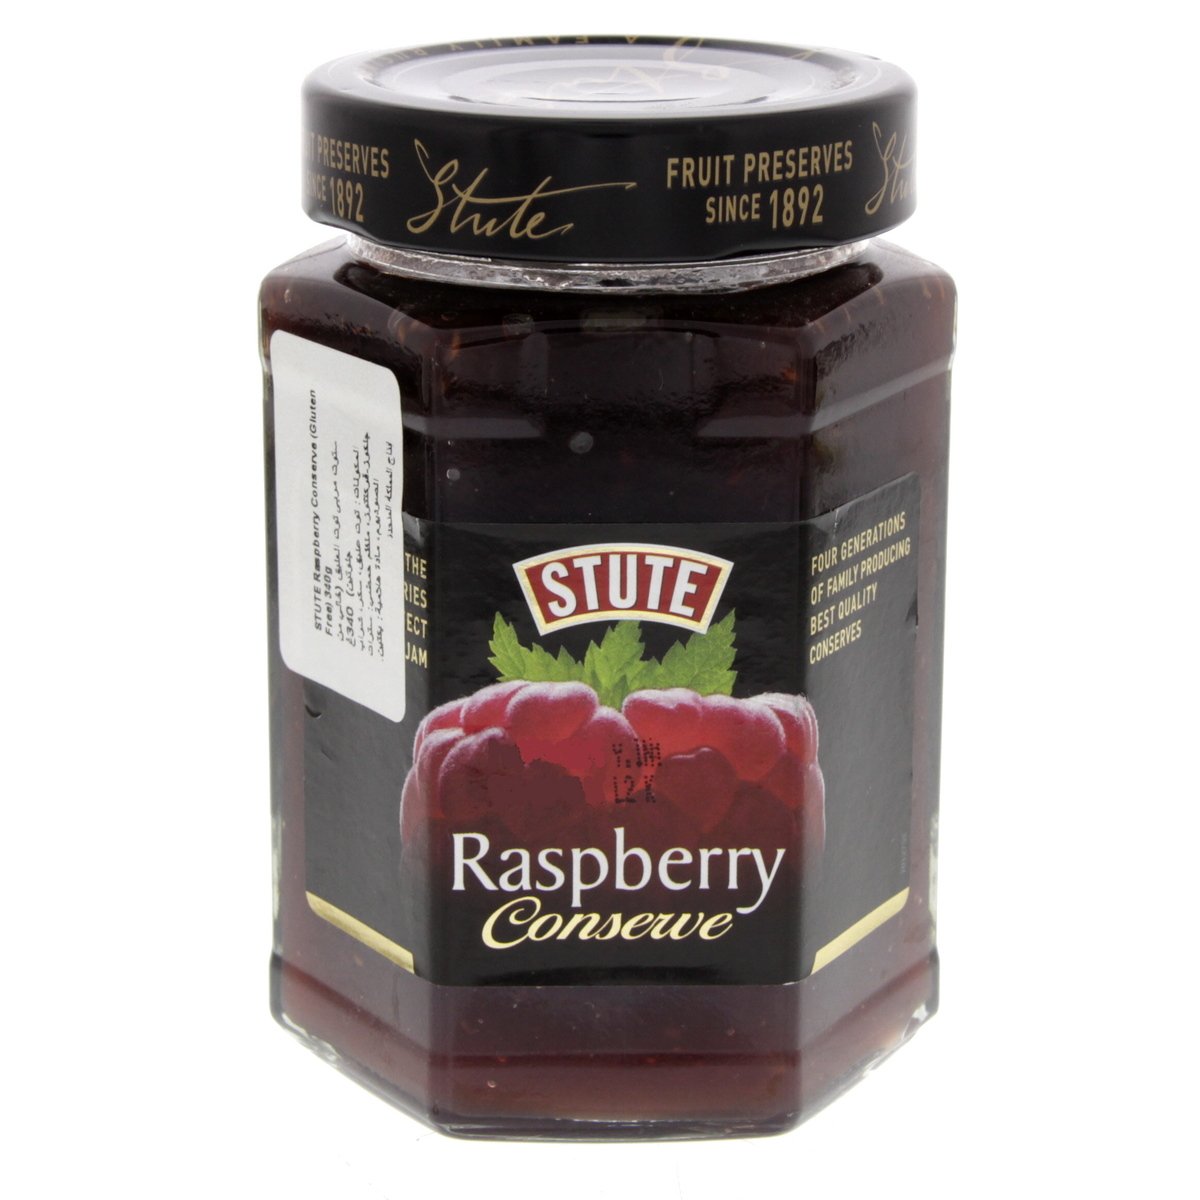 Stute Raspberry Conserve 340g